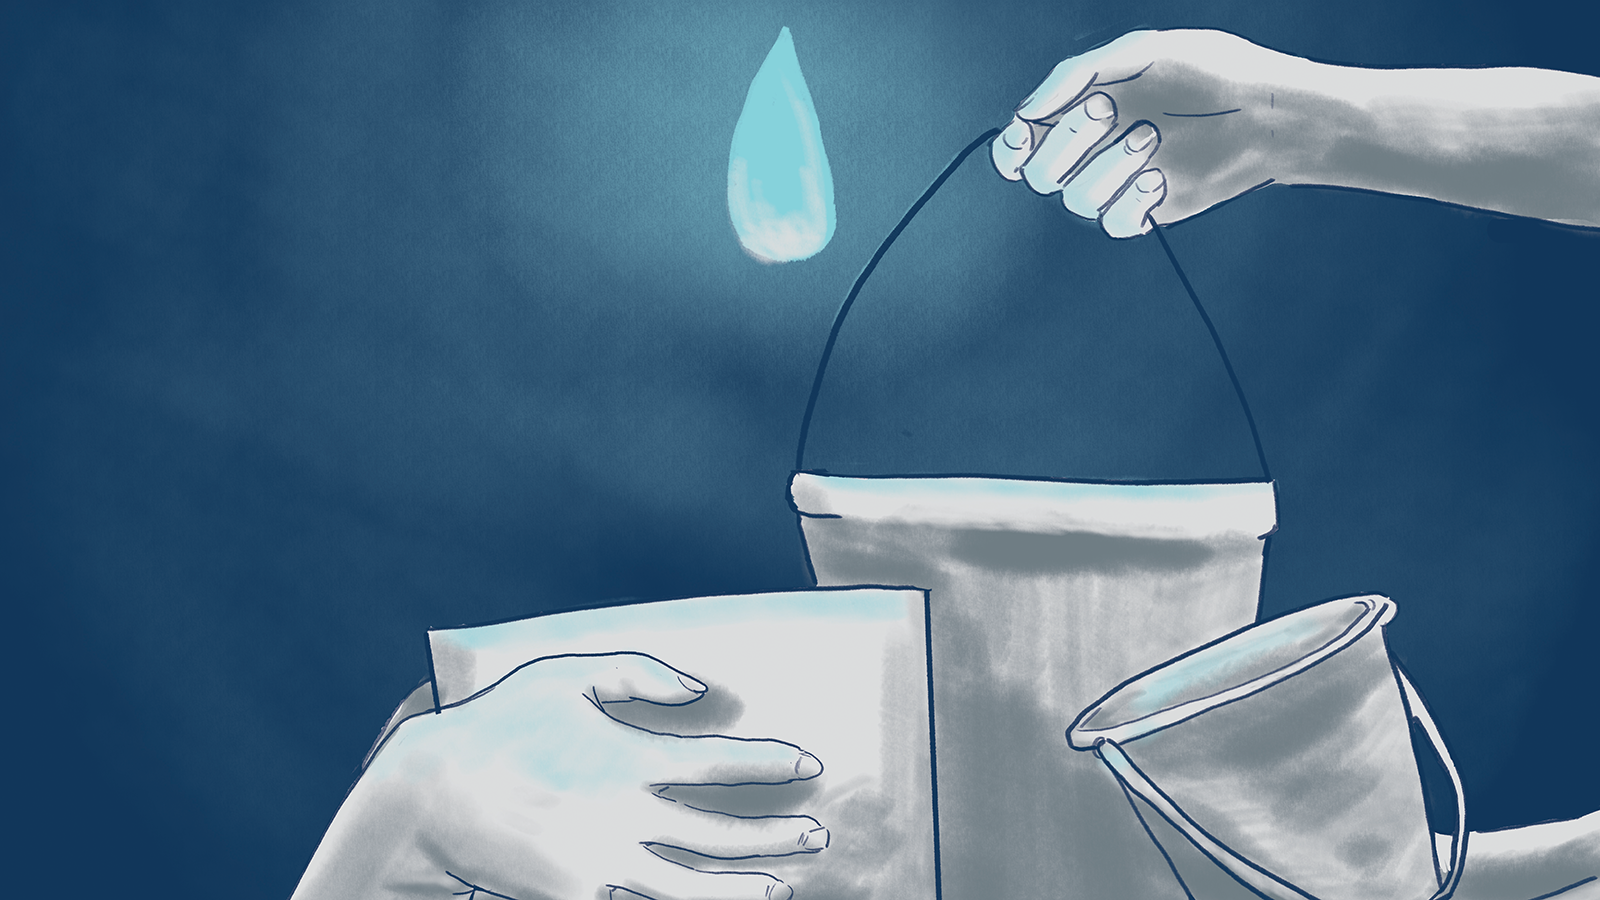 Illustration by Jesseca Buizon of a single water drop falling towards three buckets being held.